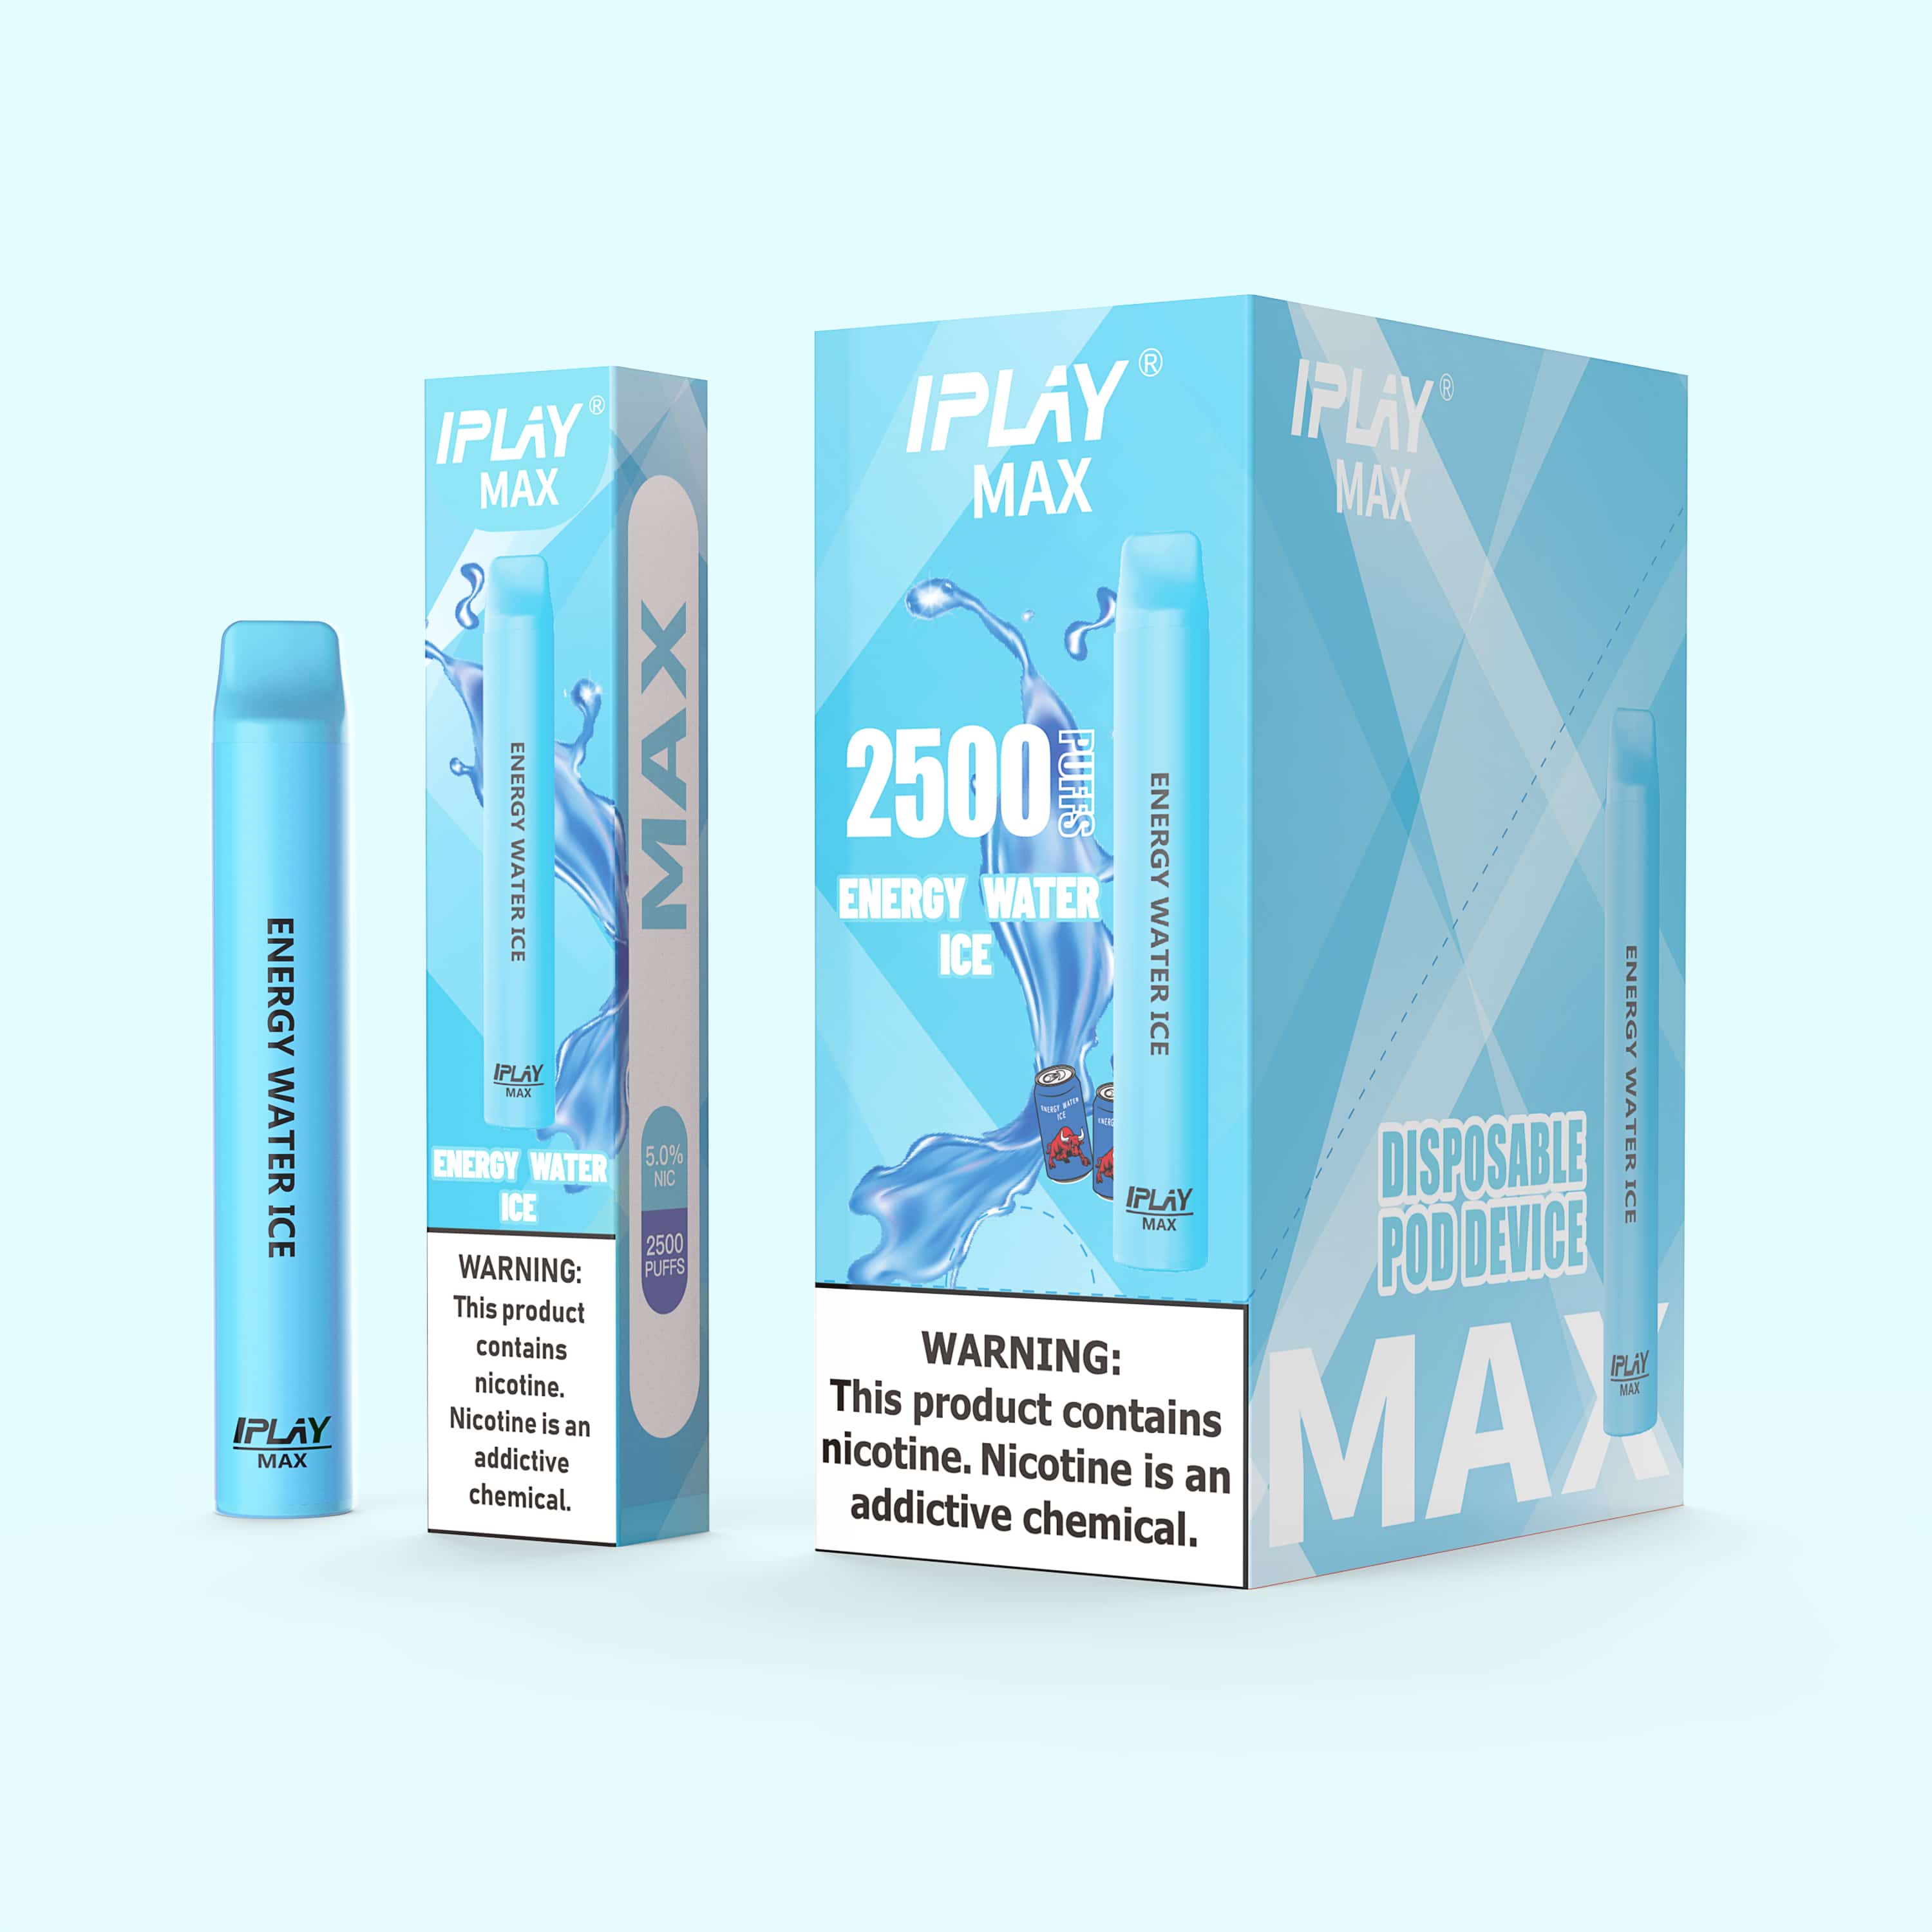 Vape iPlay Max Energy Water Ice